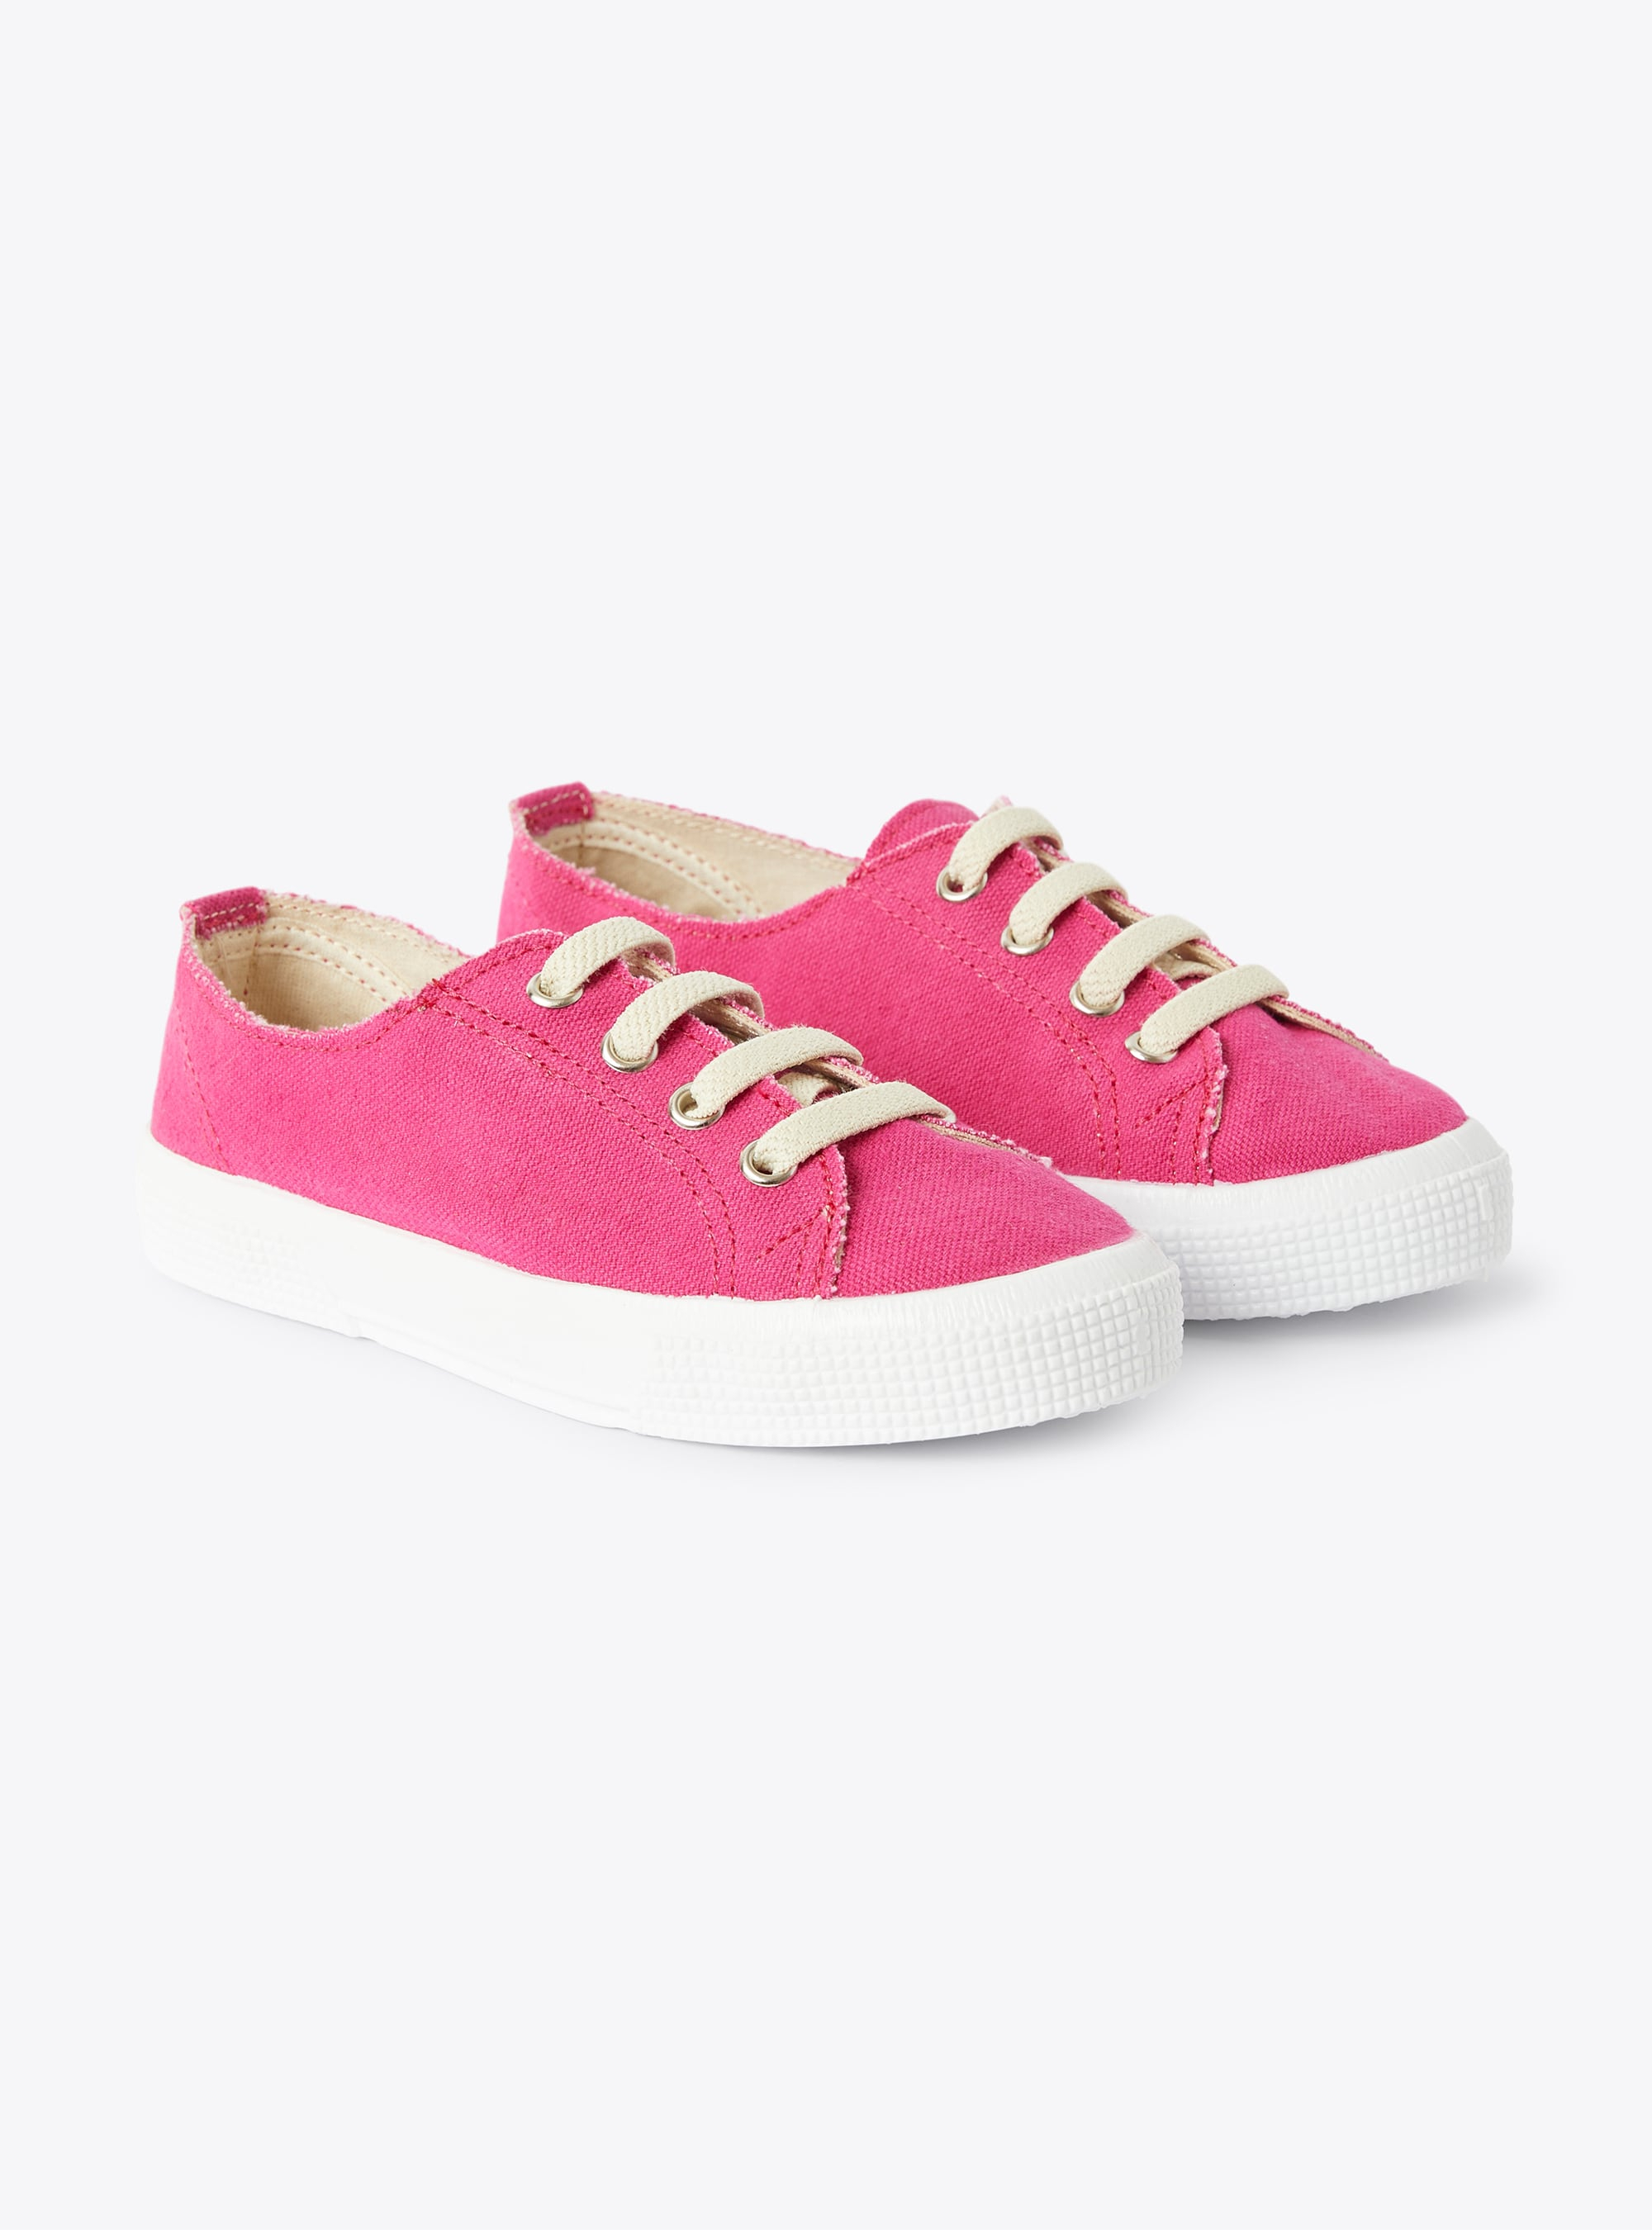 Sneaker in fuchsia-pink canvas - Shoes - Il Gufo